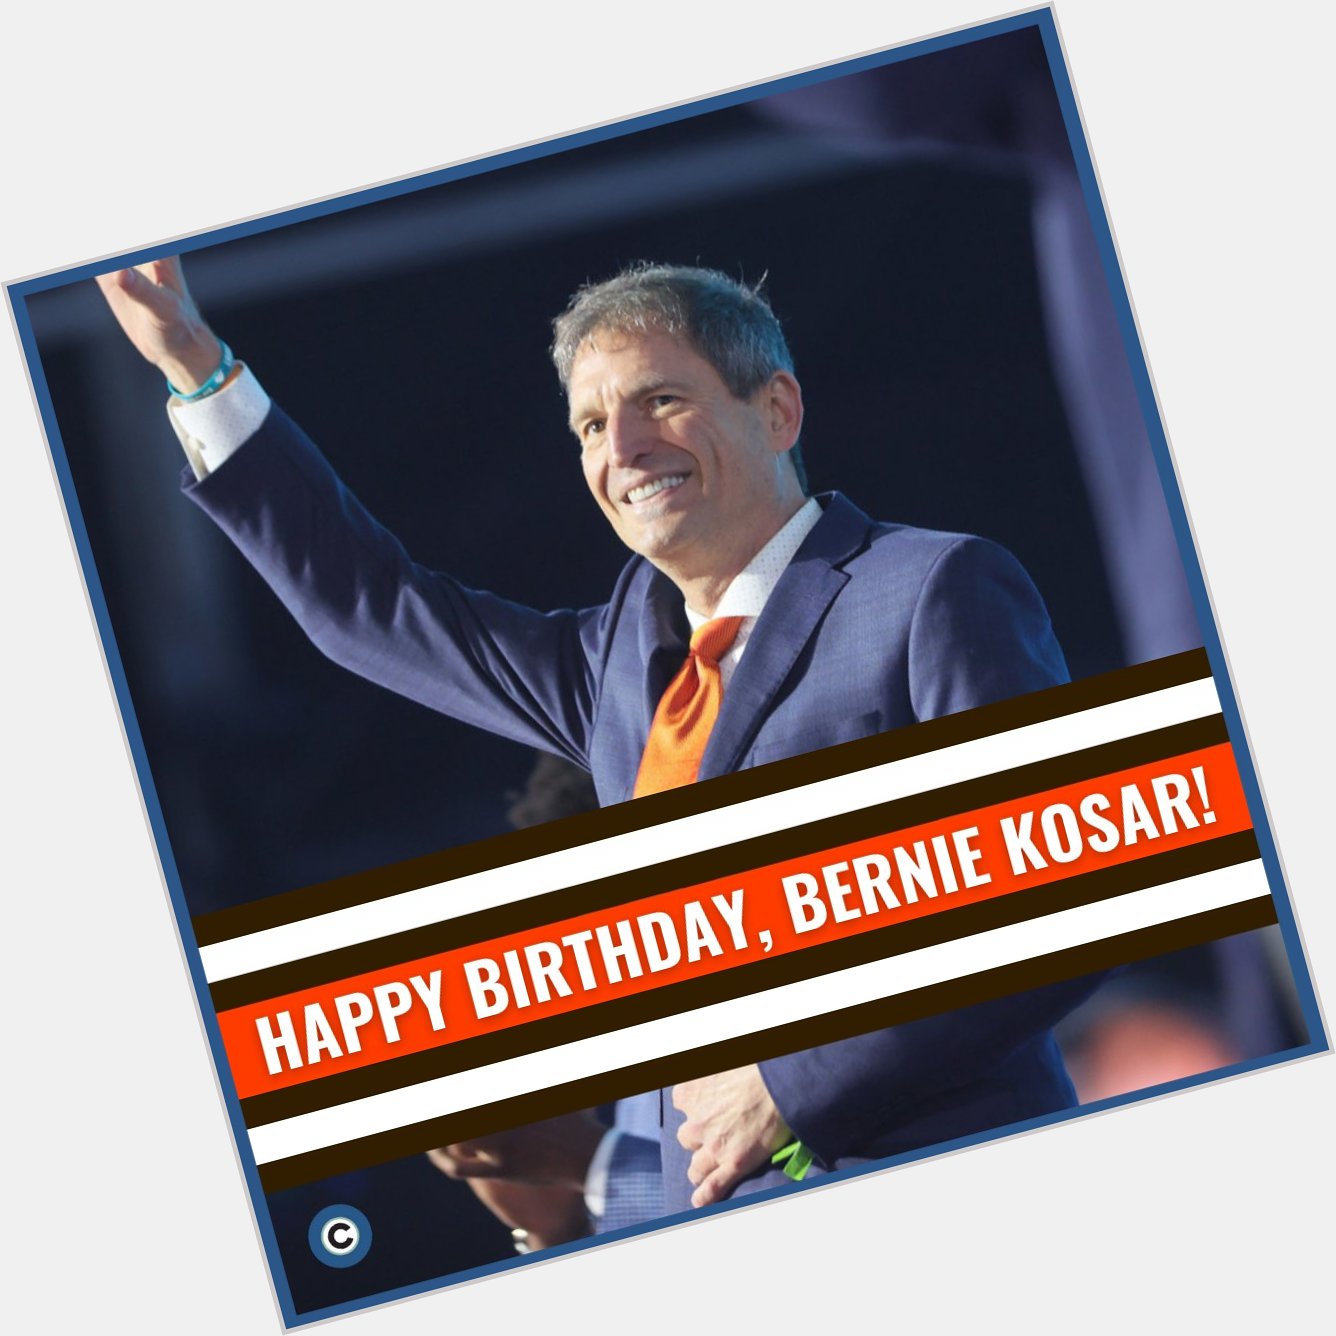 Wish Browns legend Bernie Kosar a happy 58th birthday! Photo: John Kuntz, 